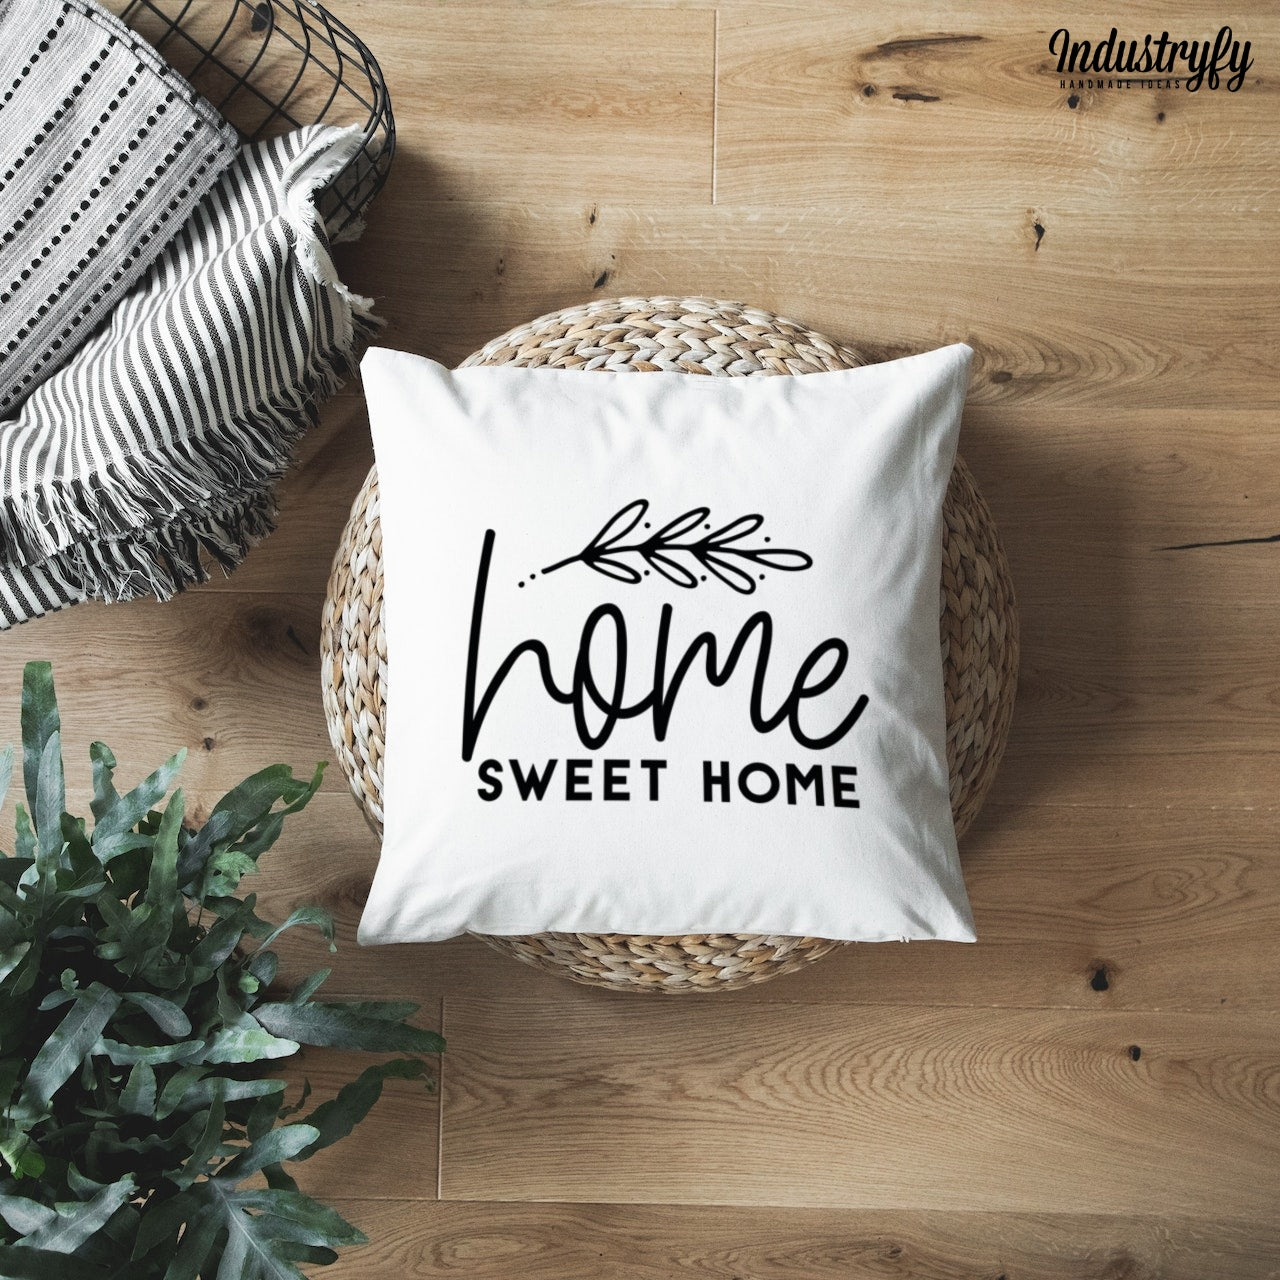 Kissenhülle | Home sweet home – Industryfy | Dekokissen